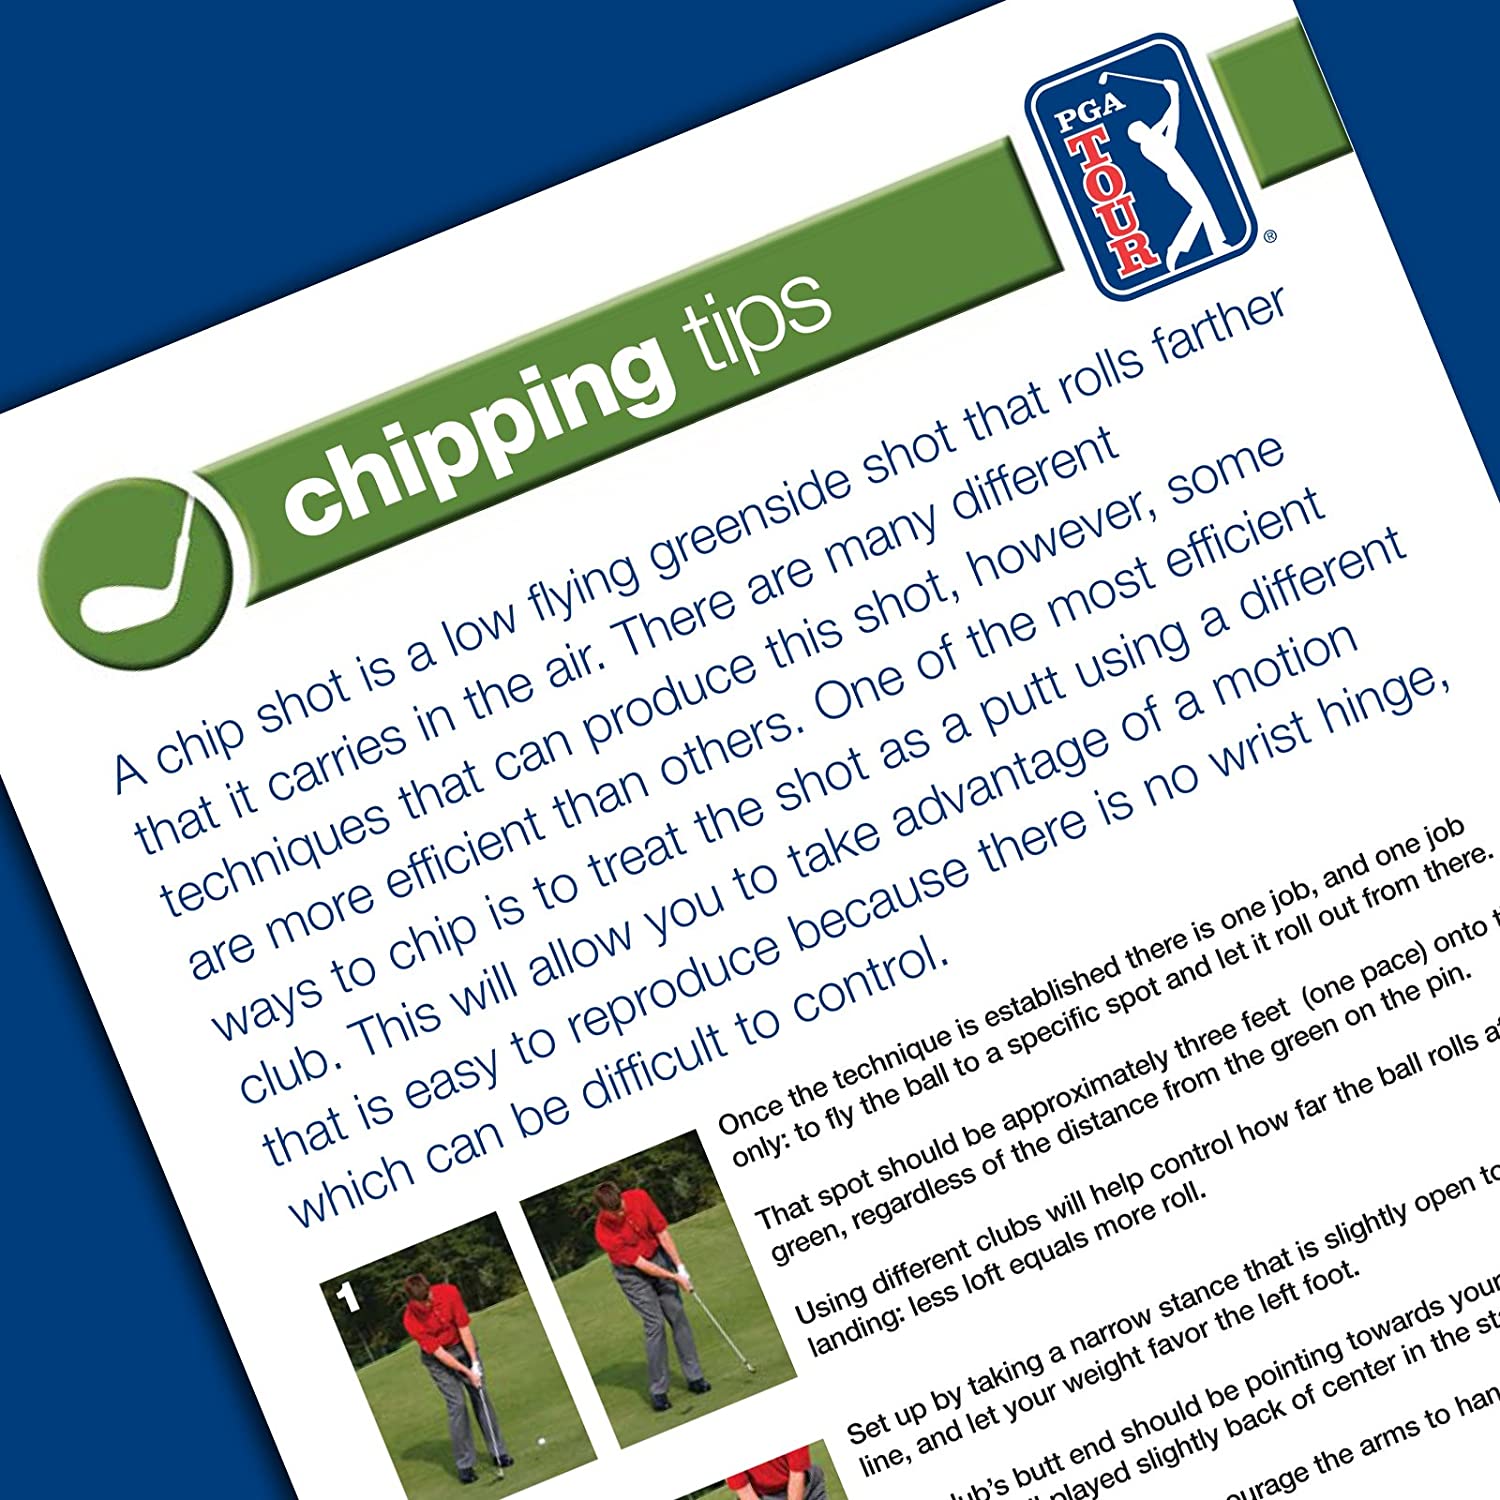 PGA Tour Pop Up Chipping Target Practice Golf Net